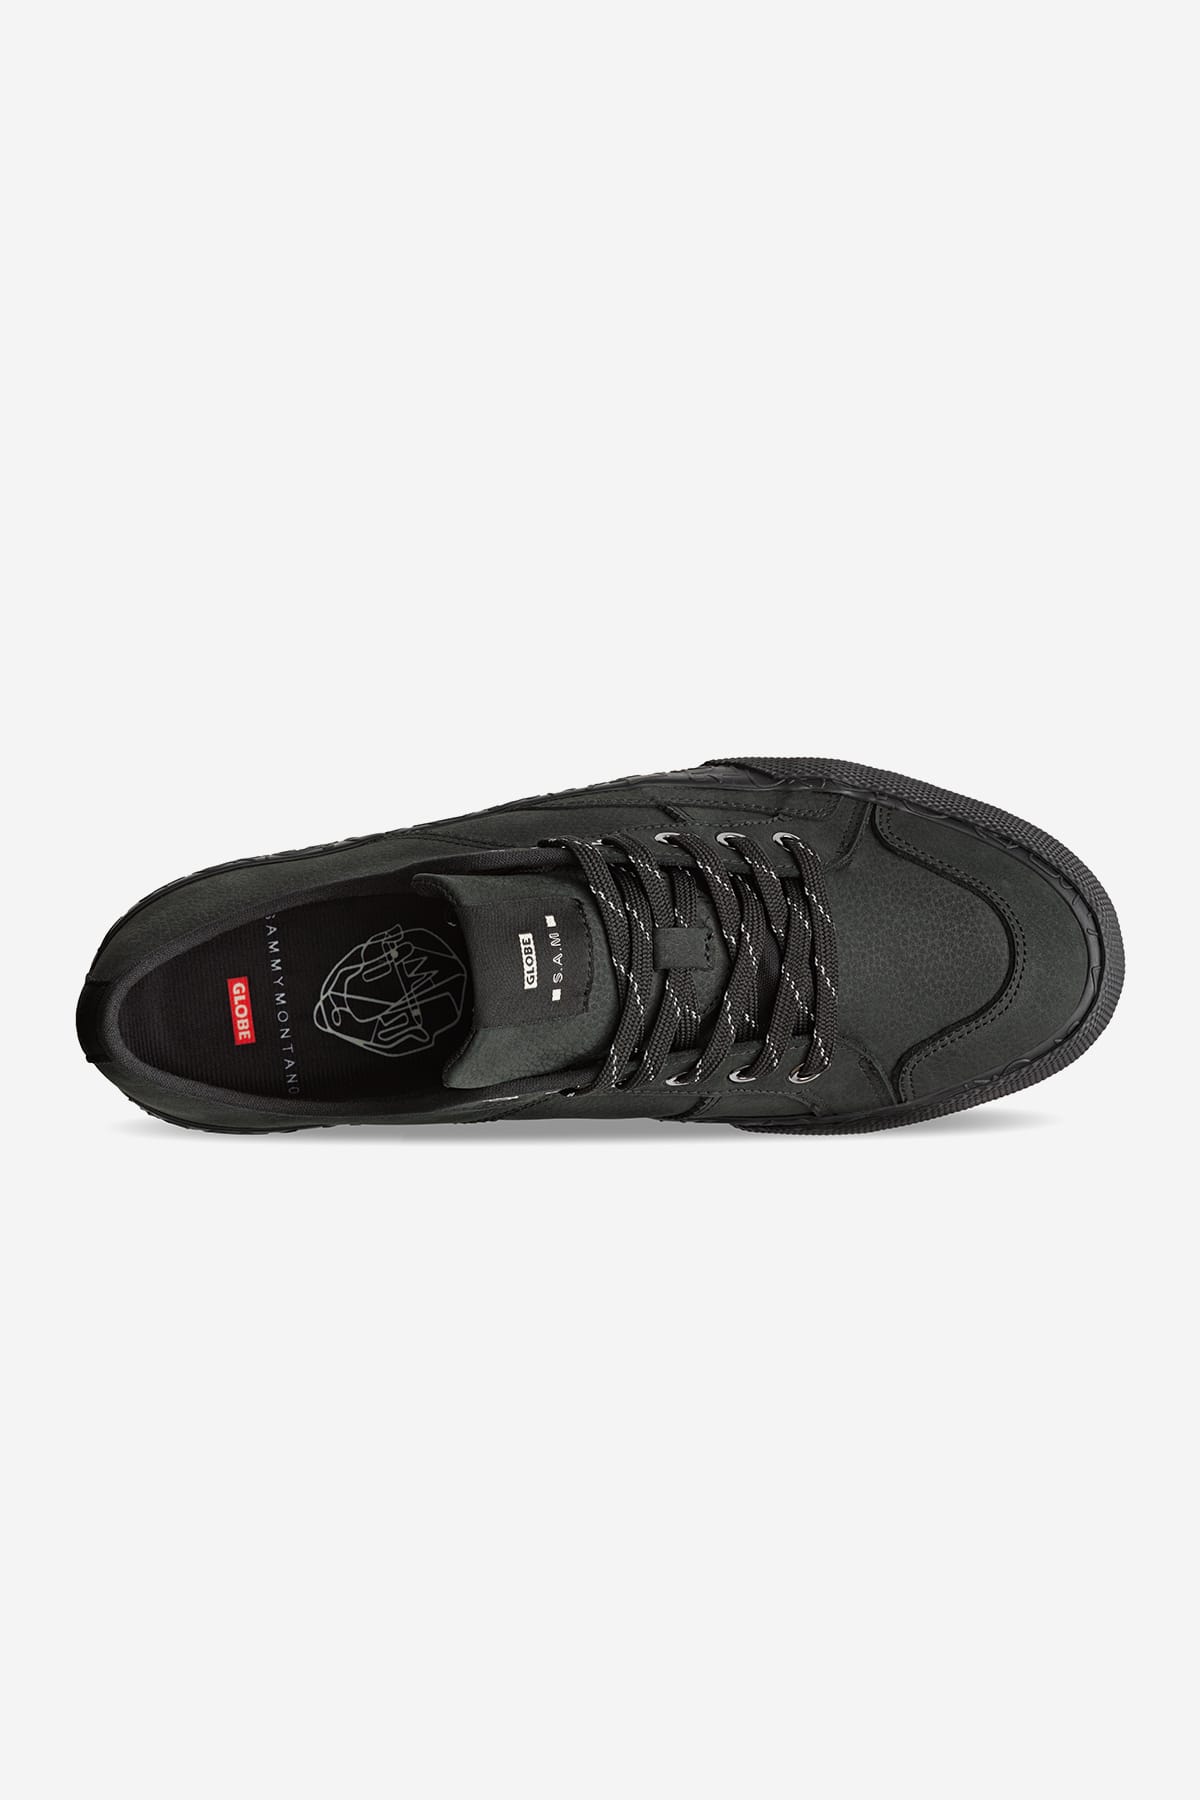 Globe - Surplus - Black/Montano - Skate Shoes